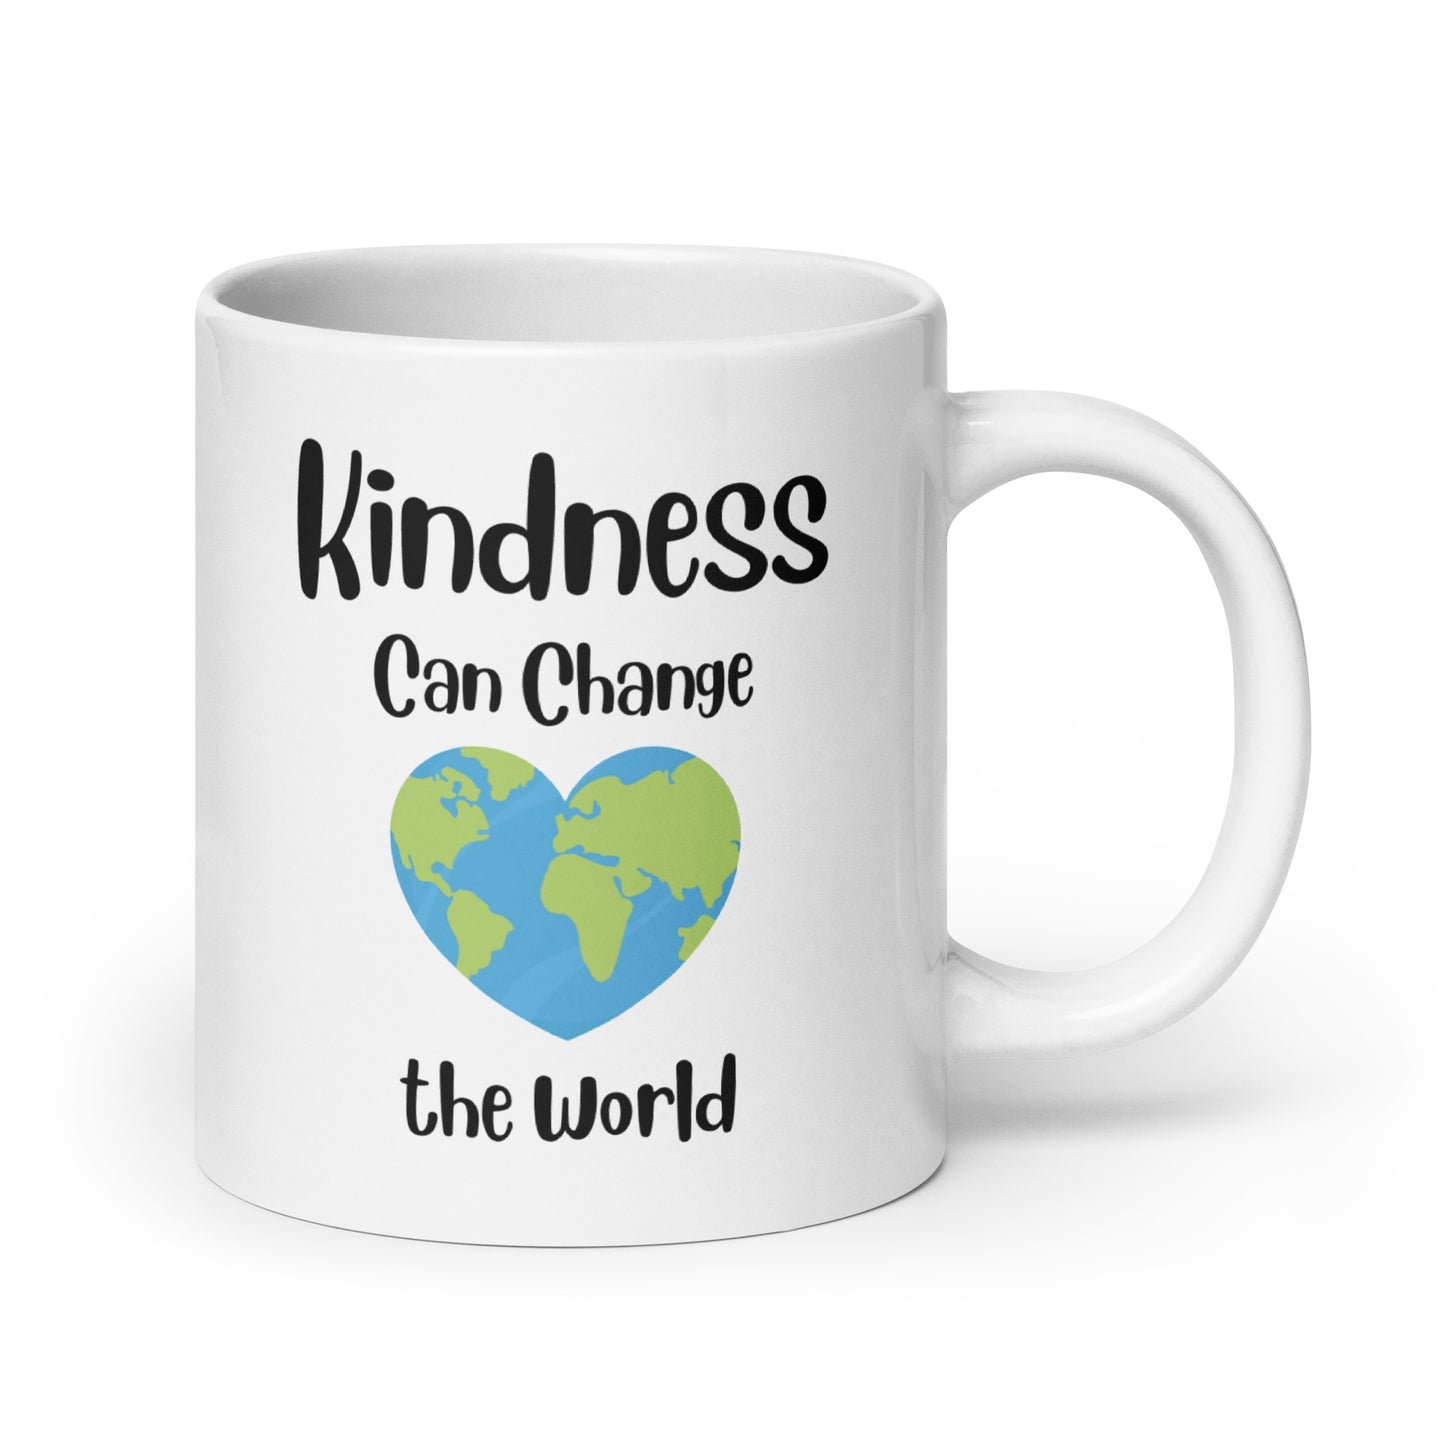 Kindness Can Change the World Ceramic Coffee Mug